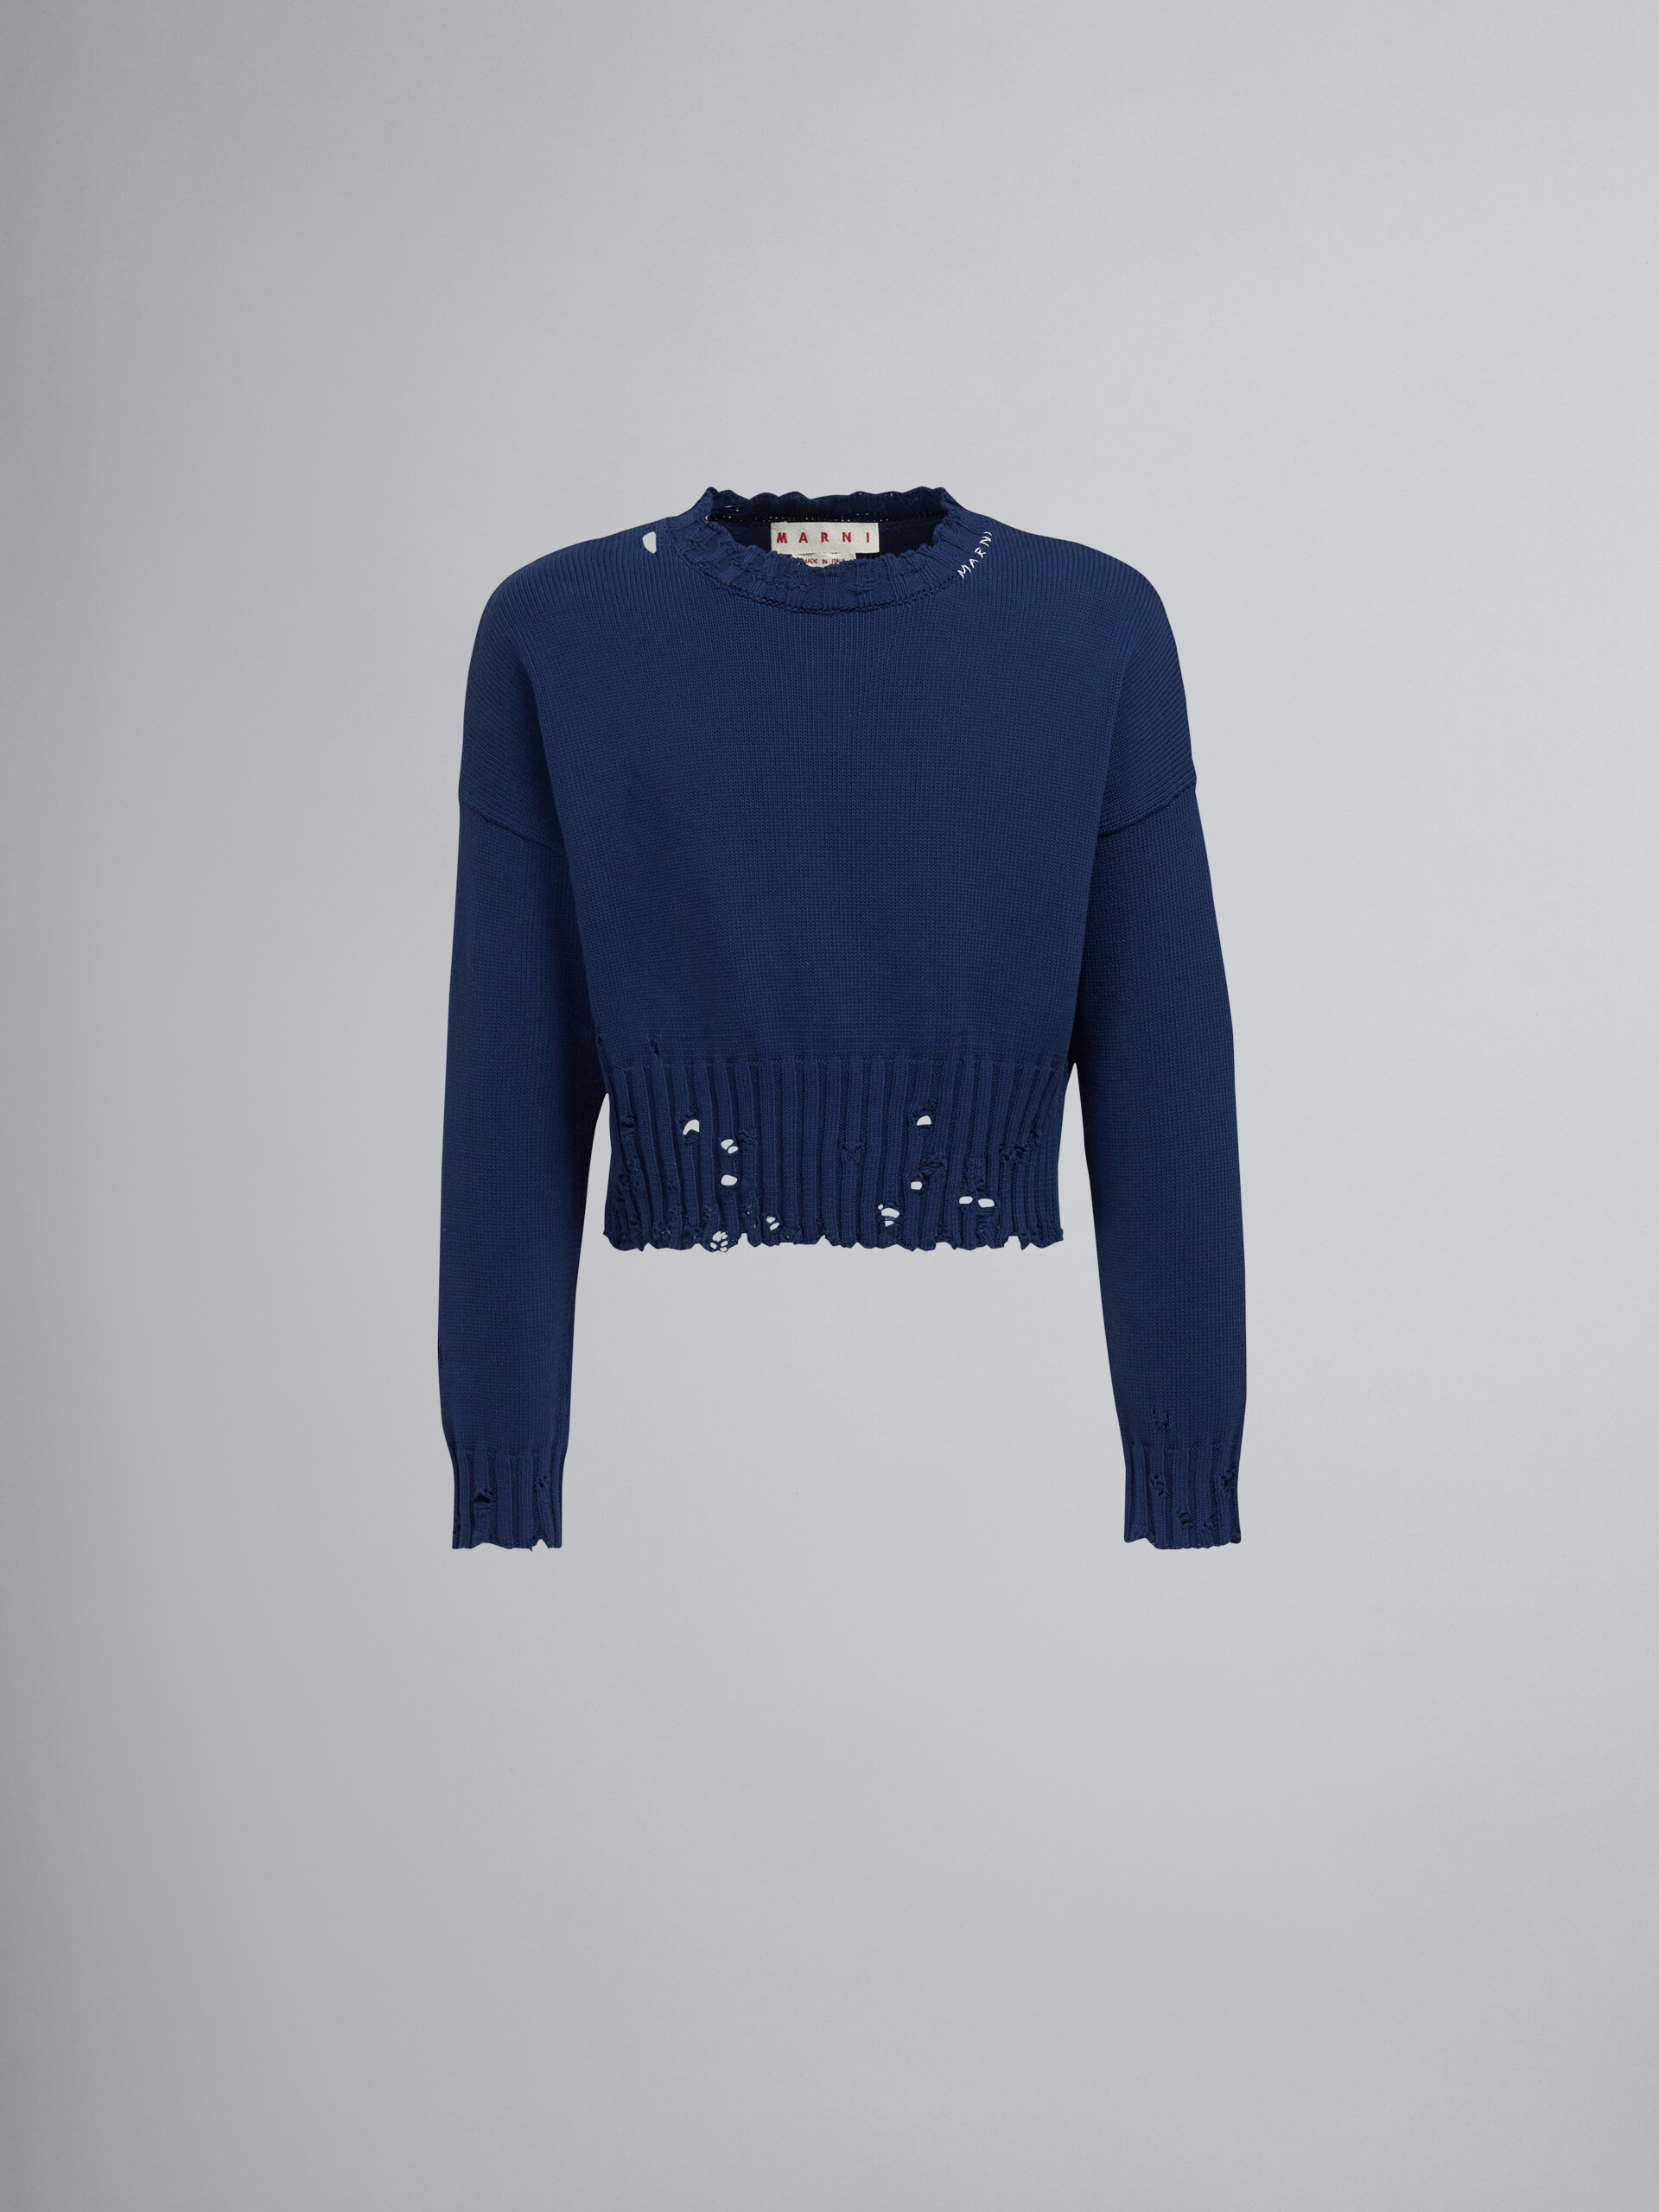 Blue cotton crewneck sweater - Pullovers - Image 1